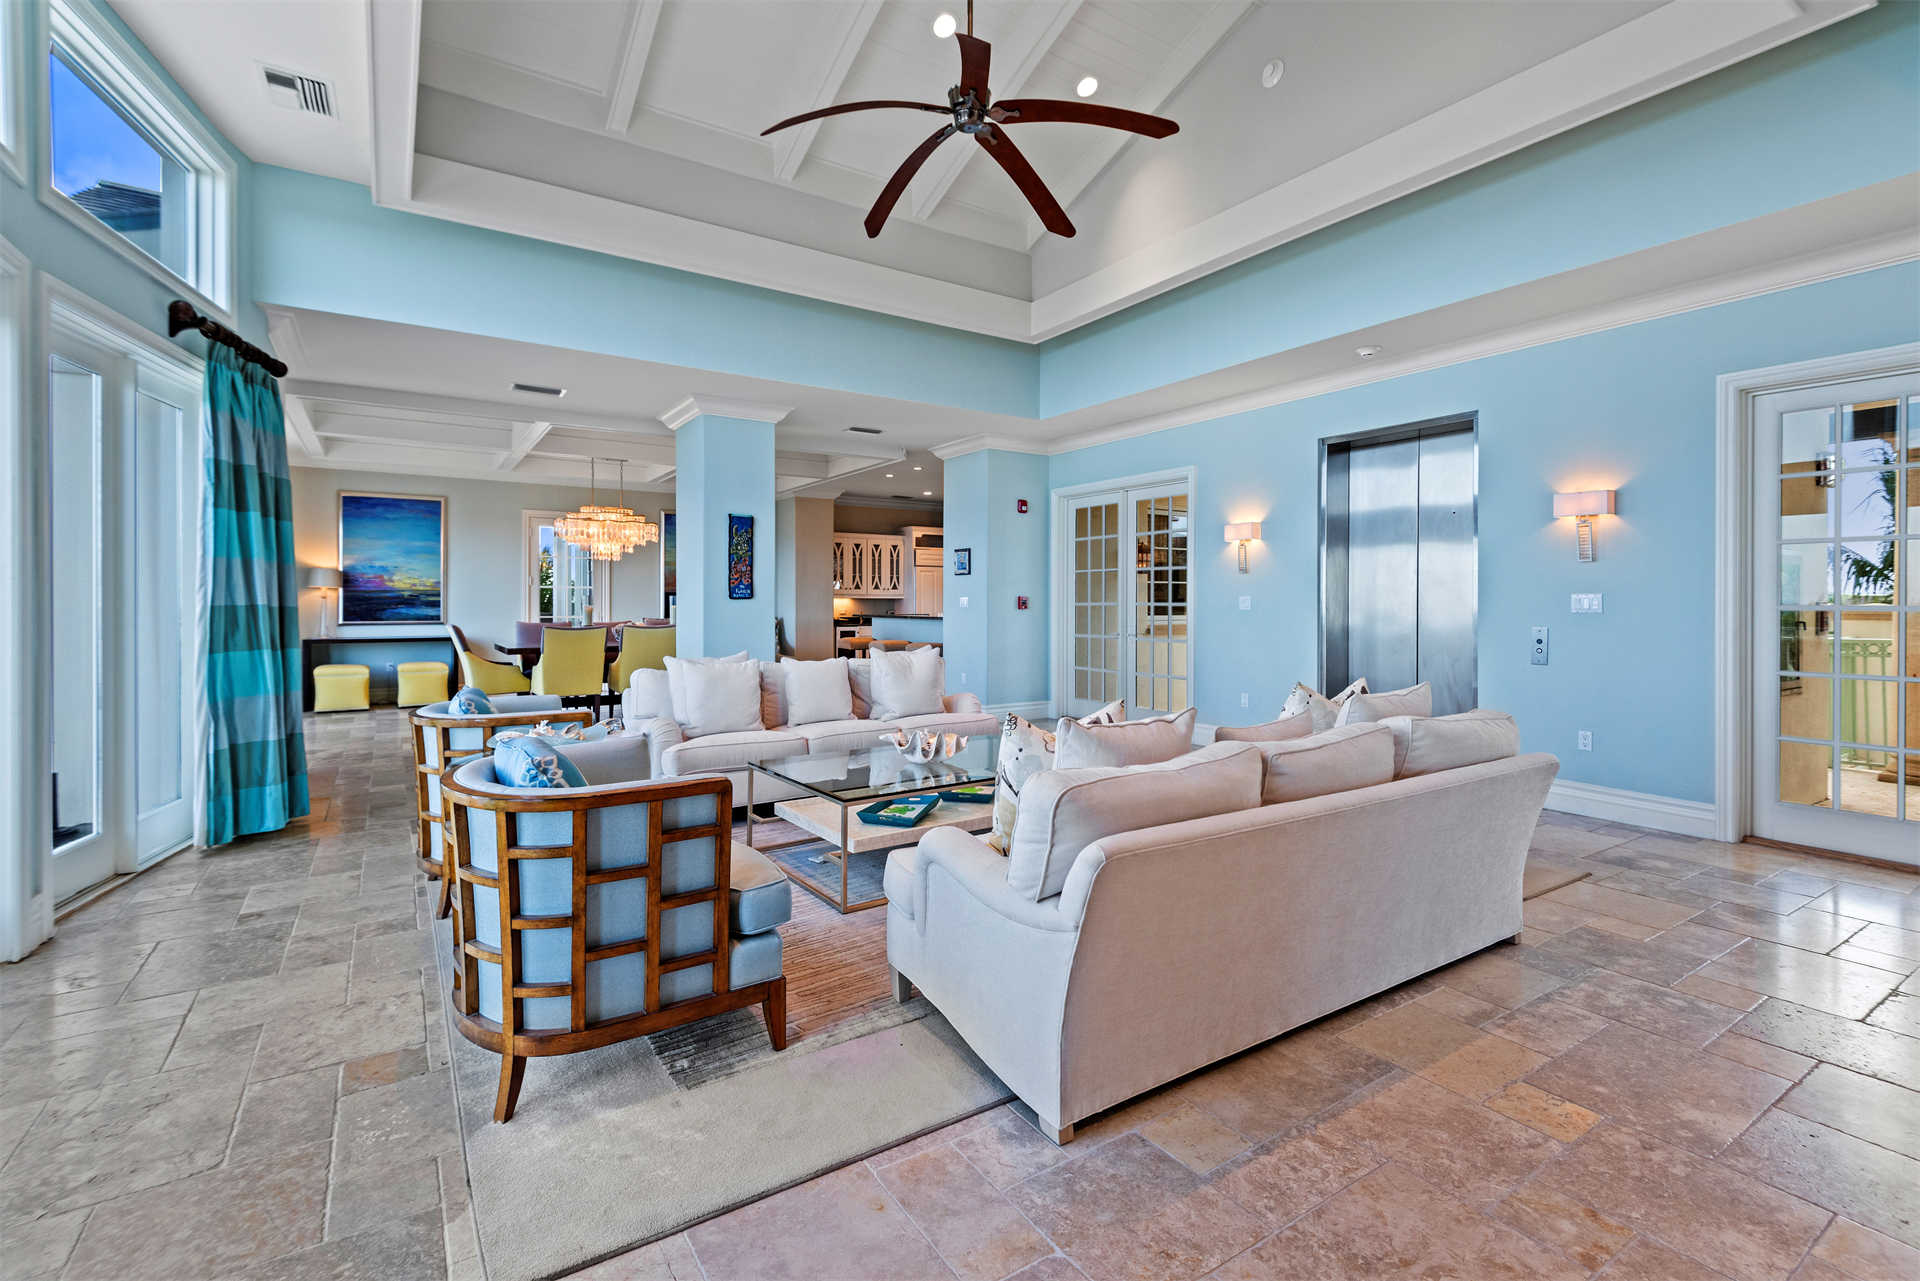 4. Condo / Townhome / Villa for Sale at Emerald Bay, Exuma Bahamas